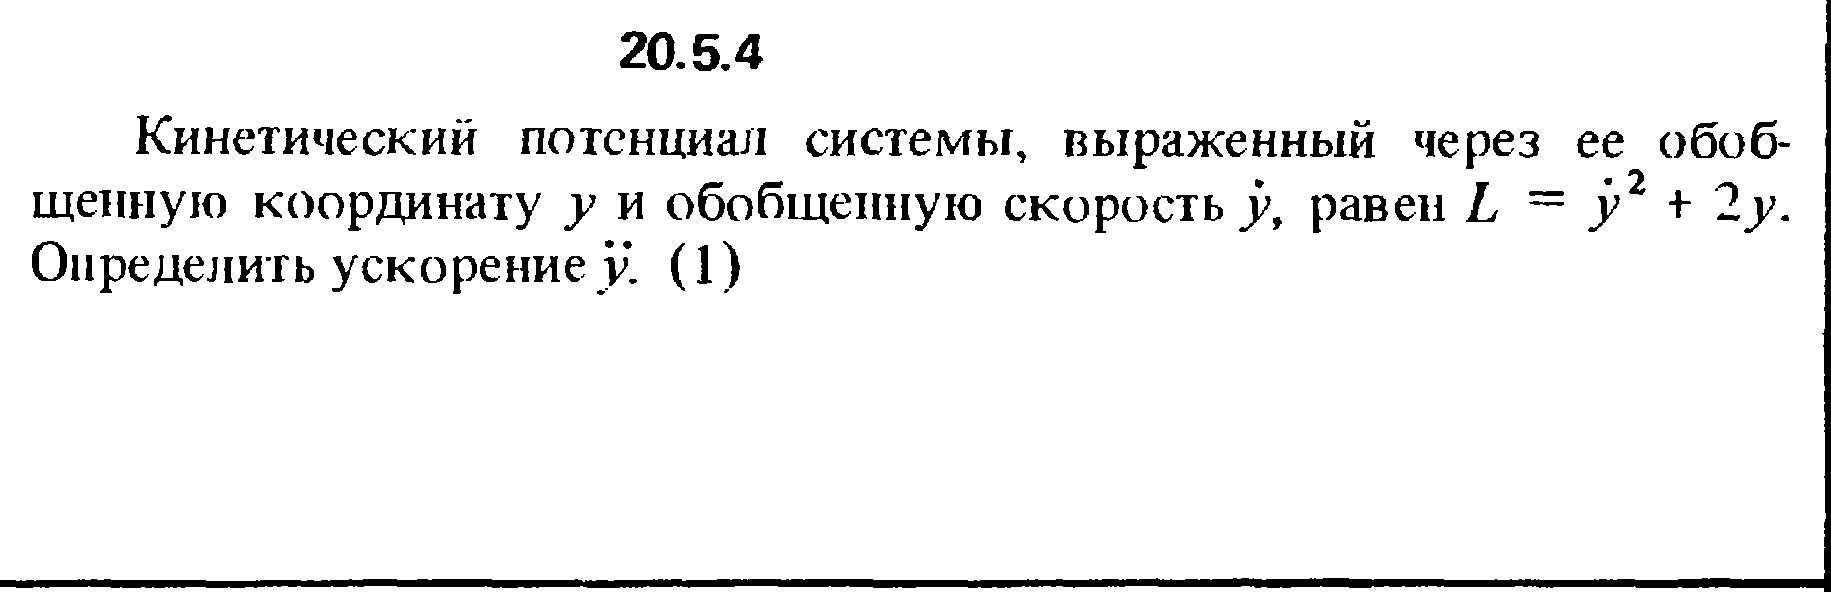 Решение 20.5.4 из сборника (решебника) Кепе О.Е. 1989